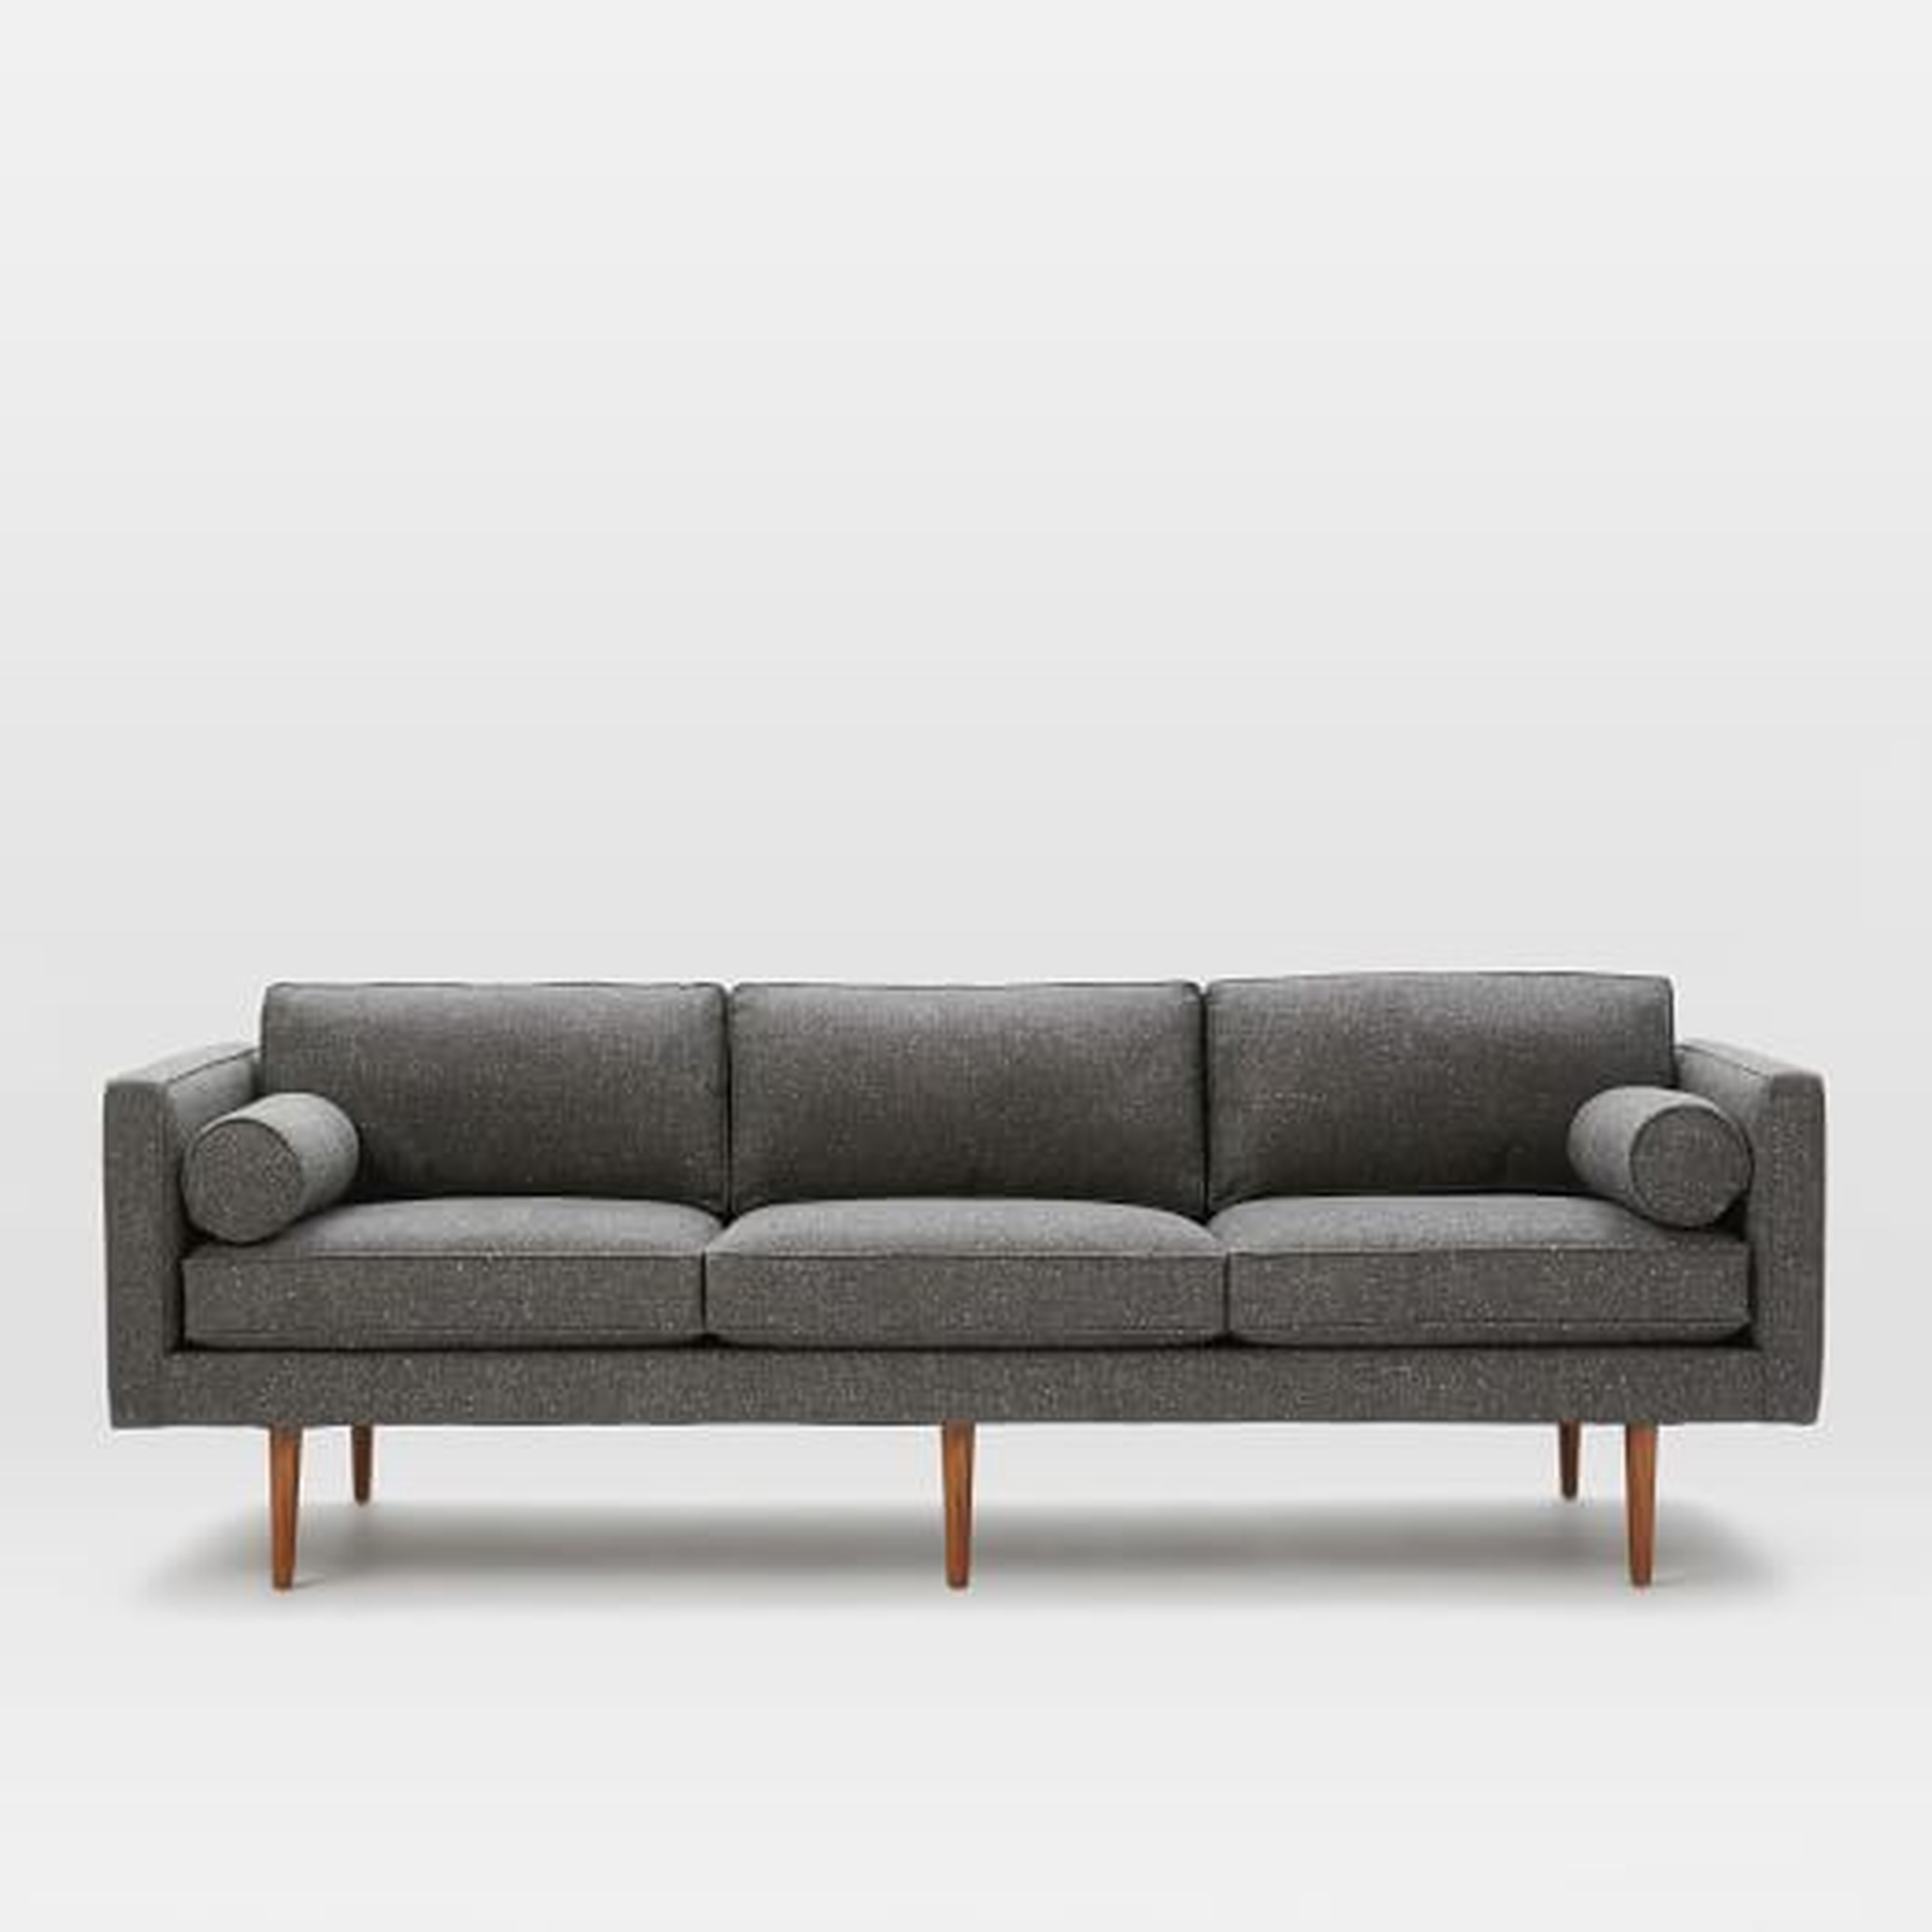 90.5" Monroe Mid-Century Sofa - Tweed, Salt + Pepper - West Elm